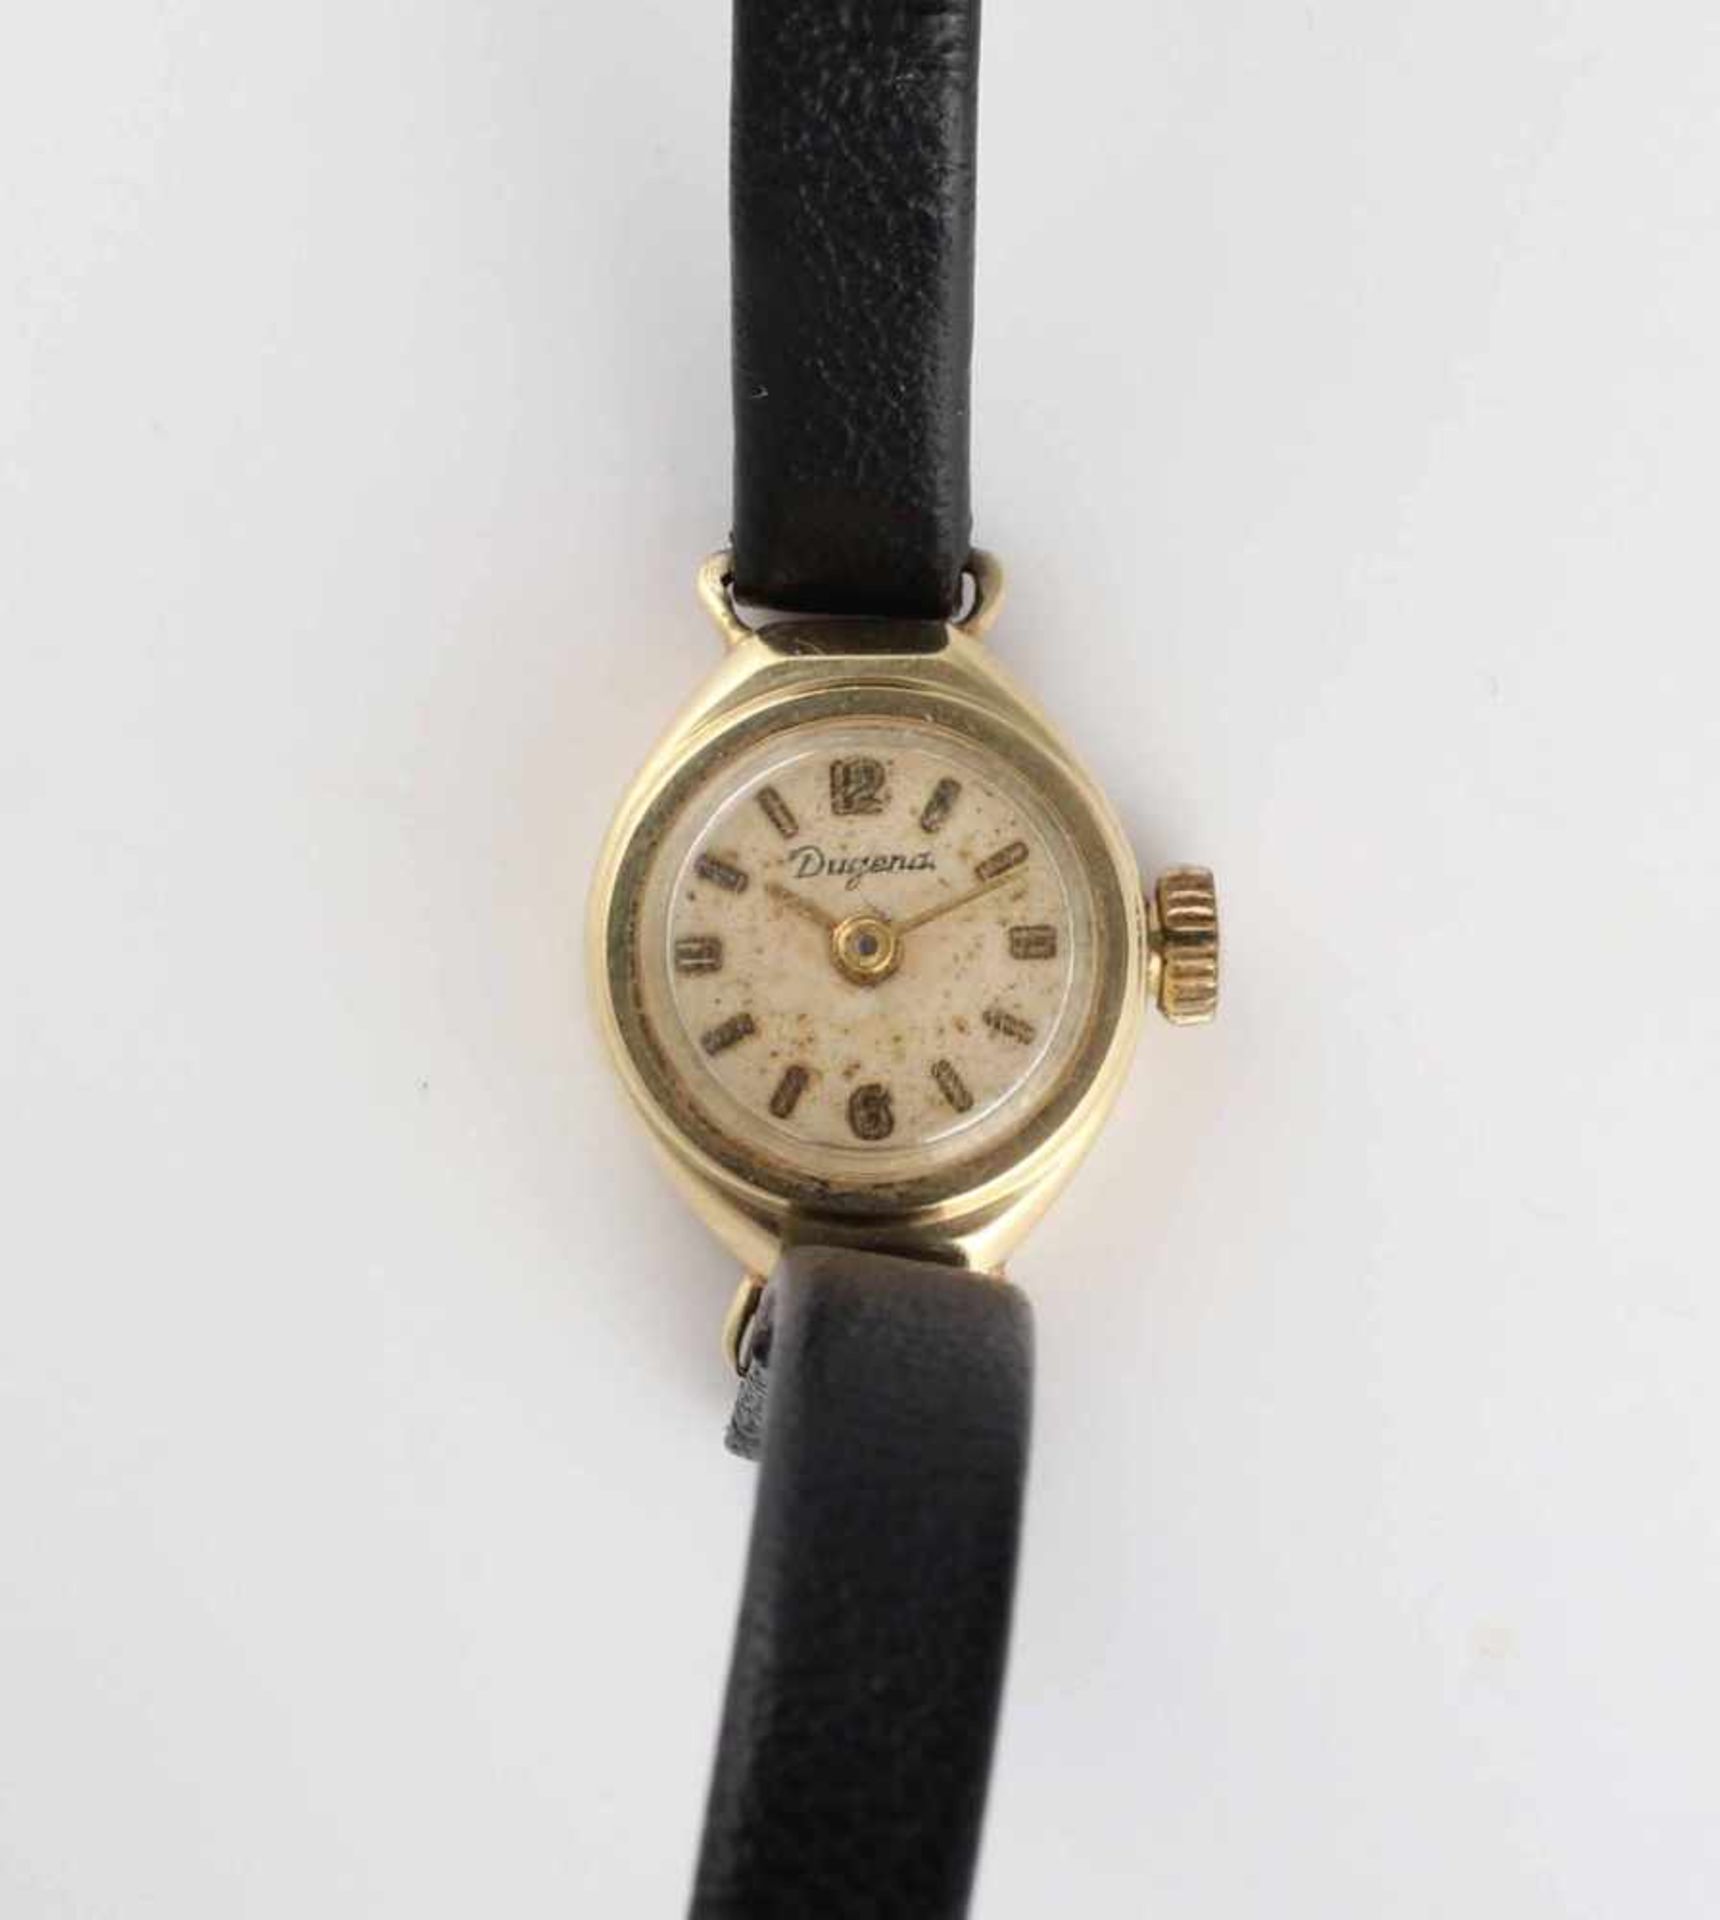 Damenarmbanduhr, Dugena585 GG, schwarzes Lederband, Zifferblatt fleckig, nicht gangbar